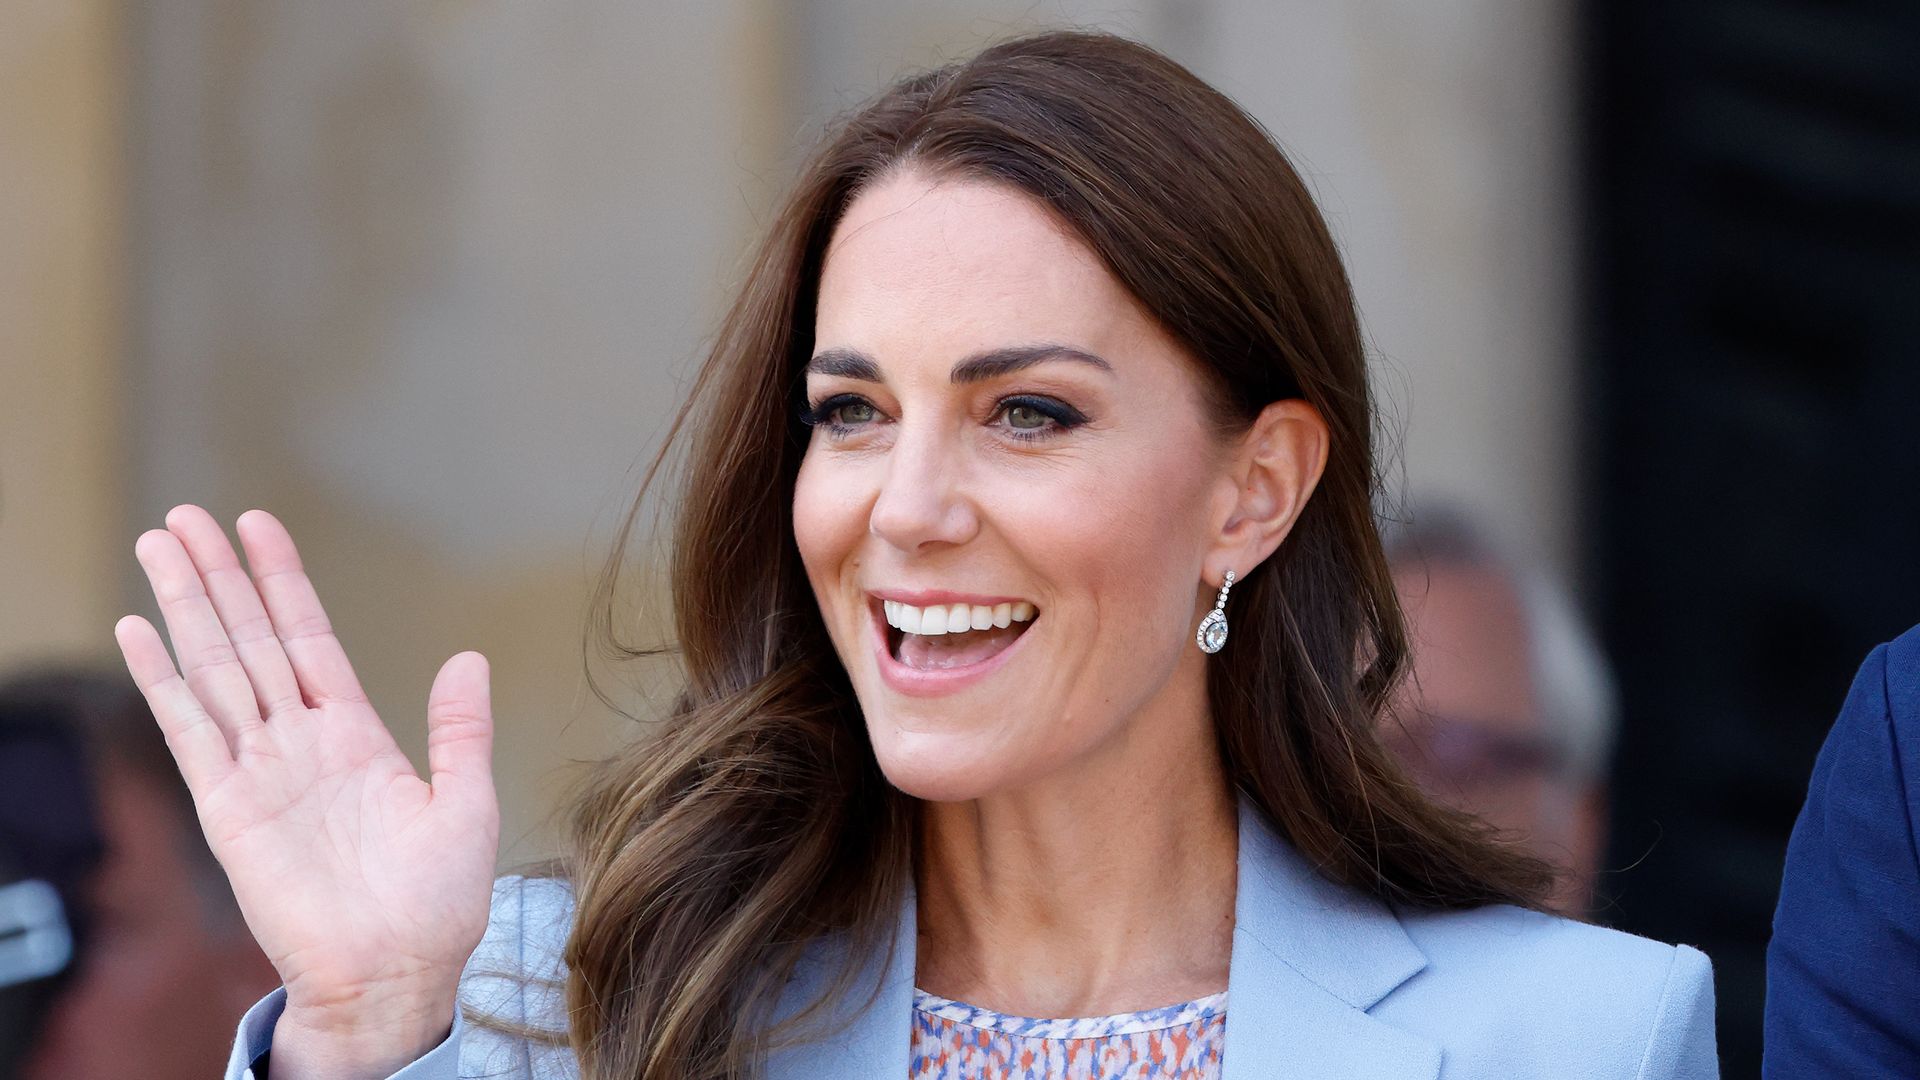 Kate Middleton waves wearing a blue coat